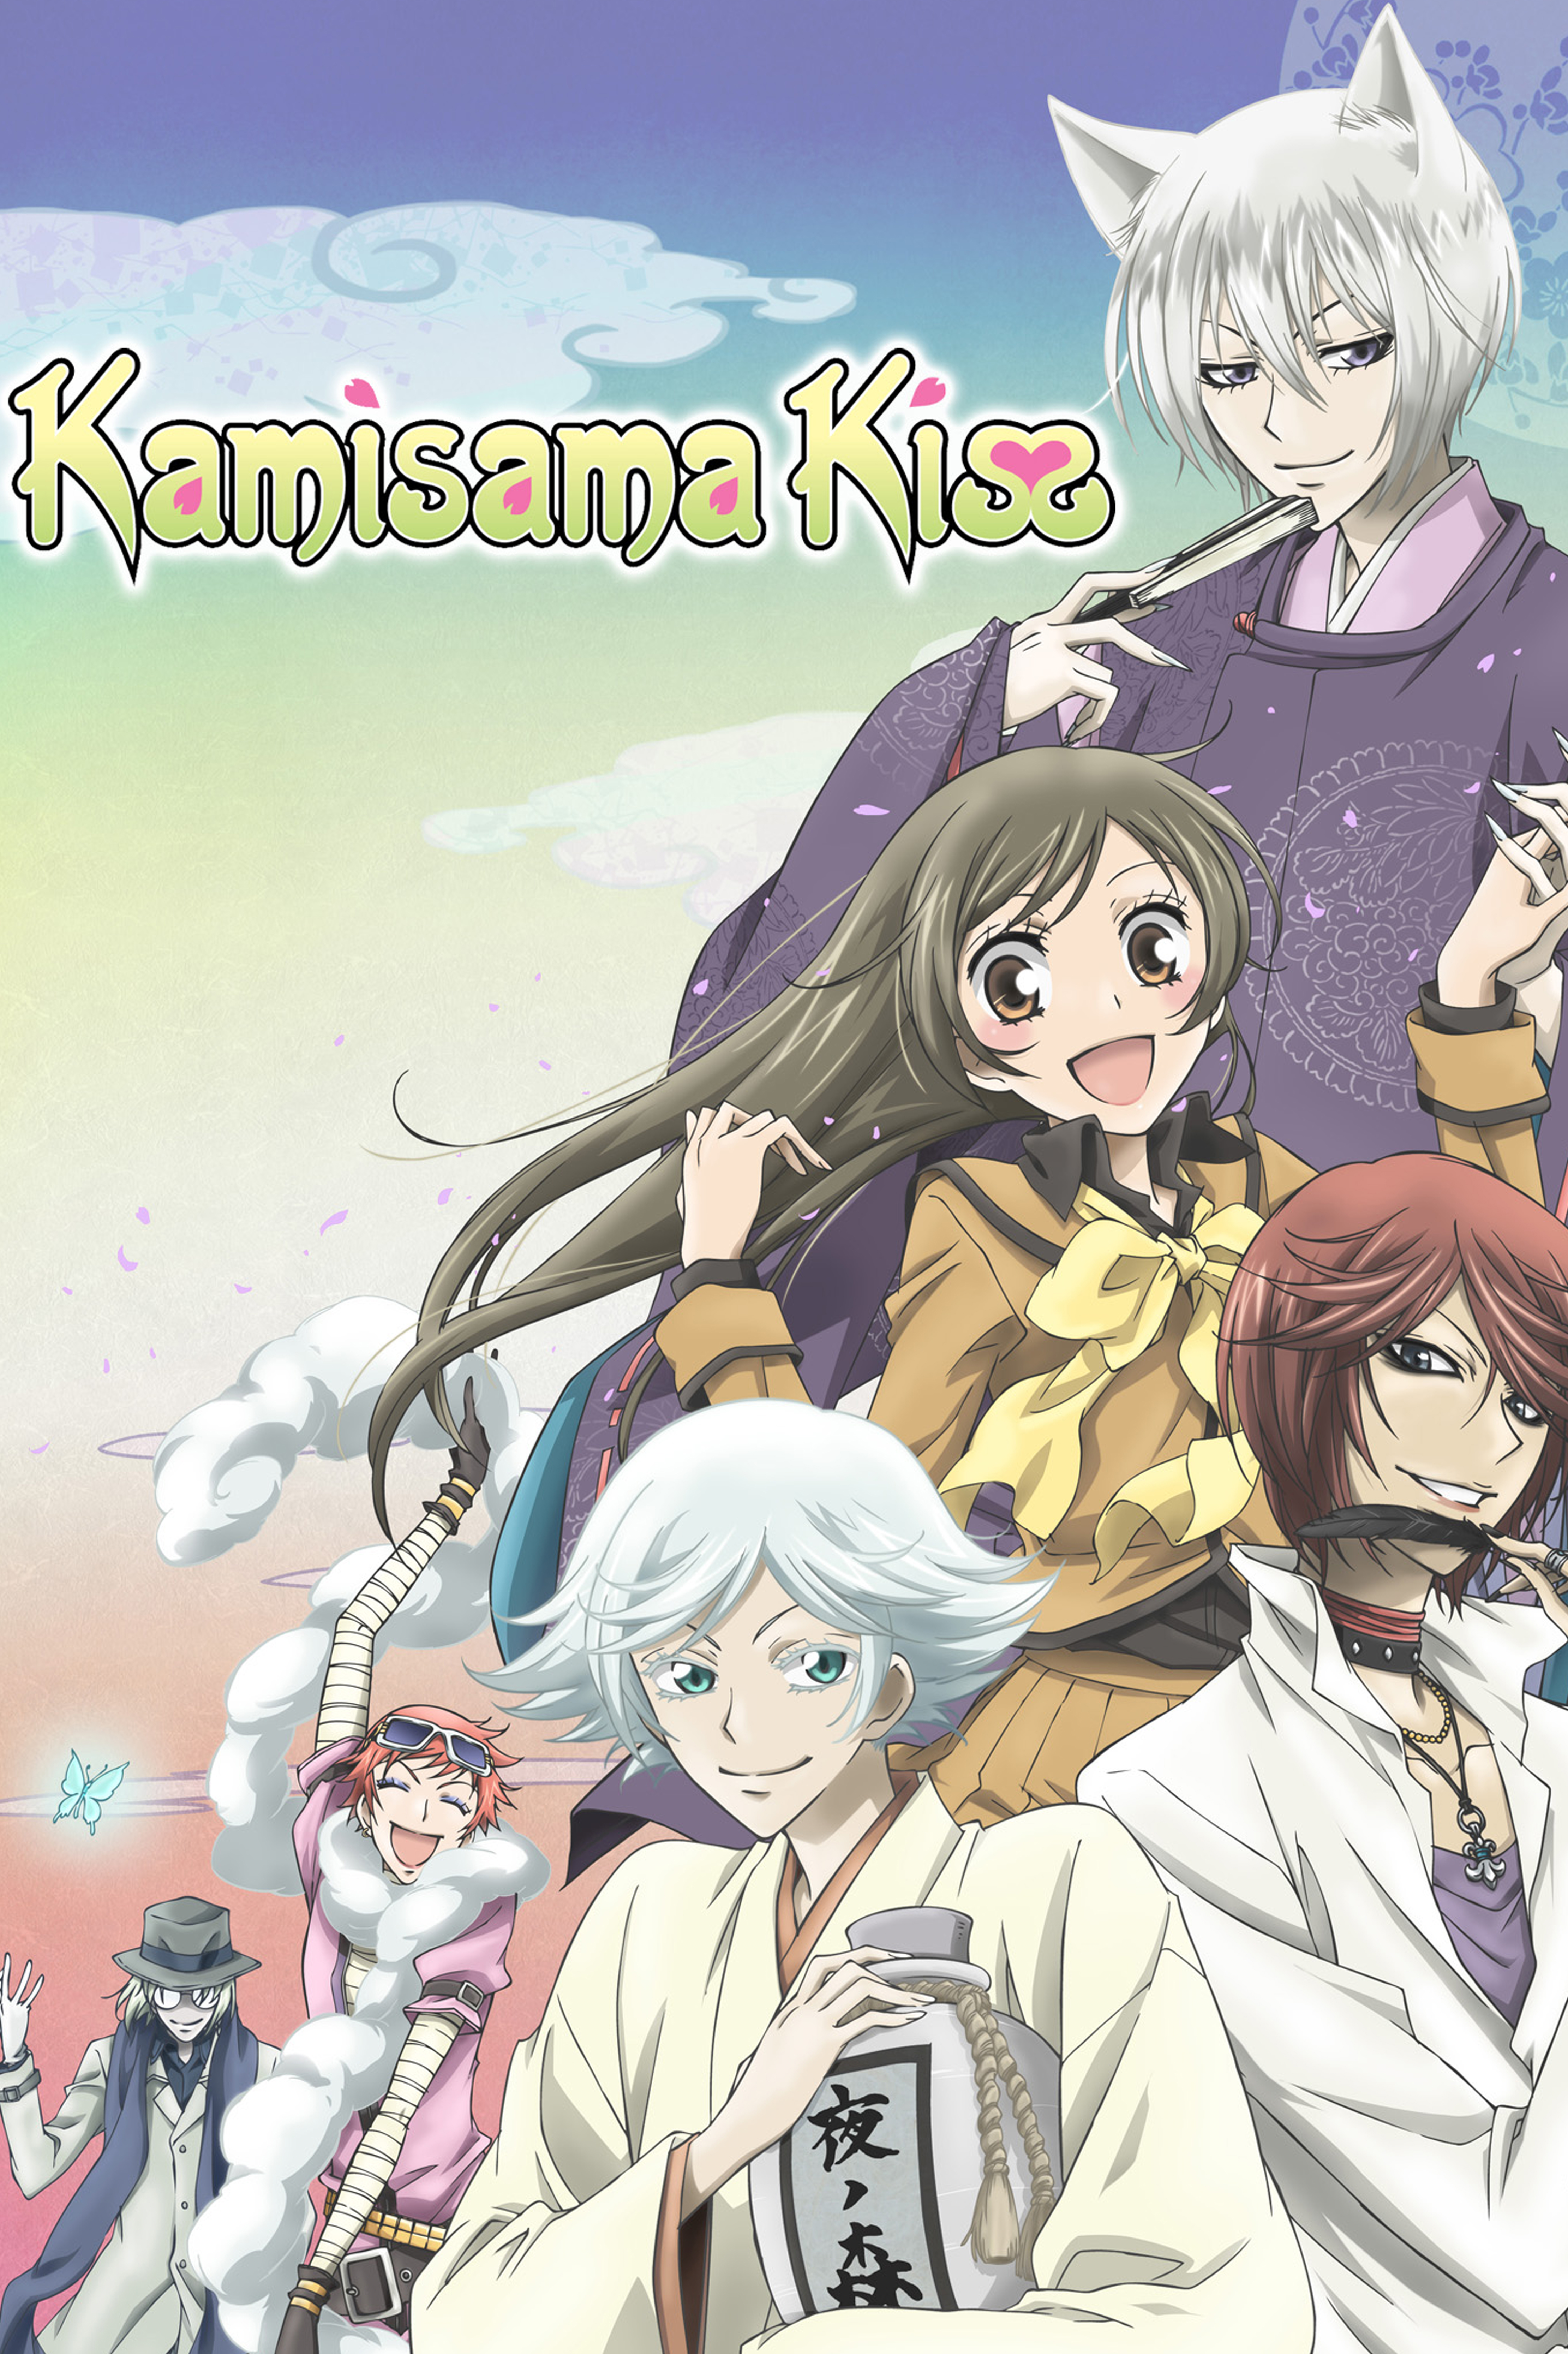 Watch Kamisama Kiss season 2 episode 4 streaming online